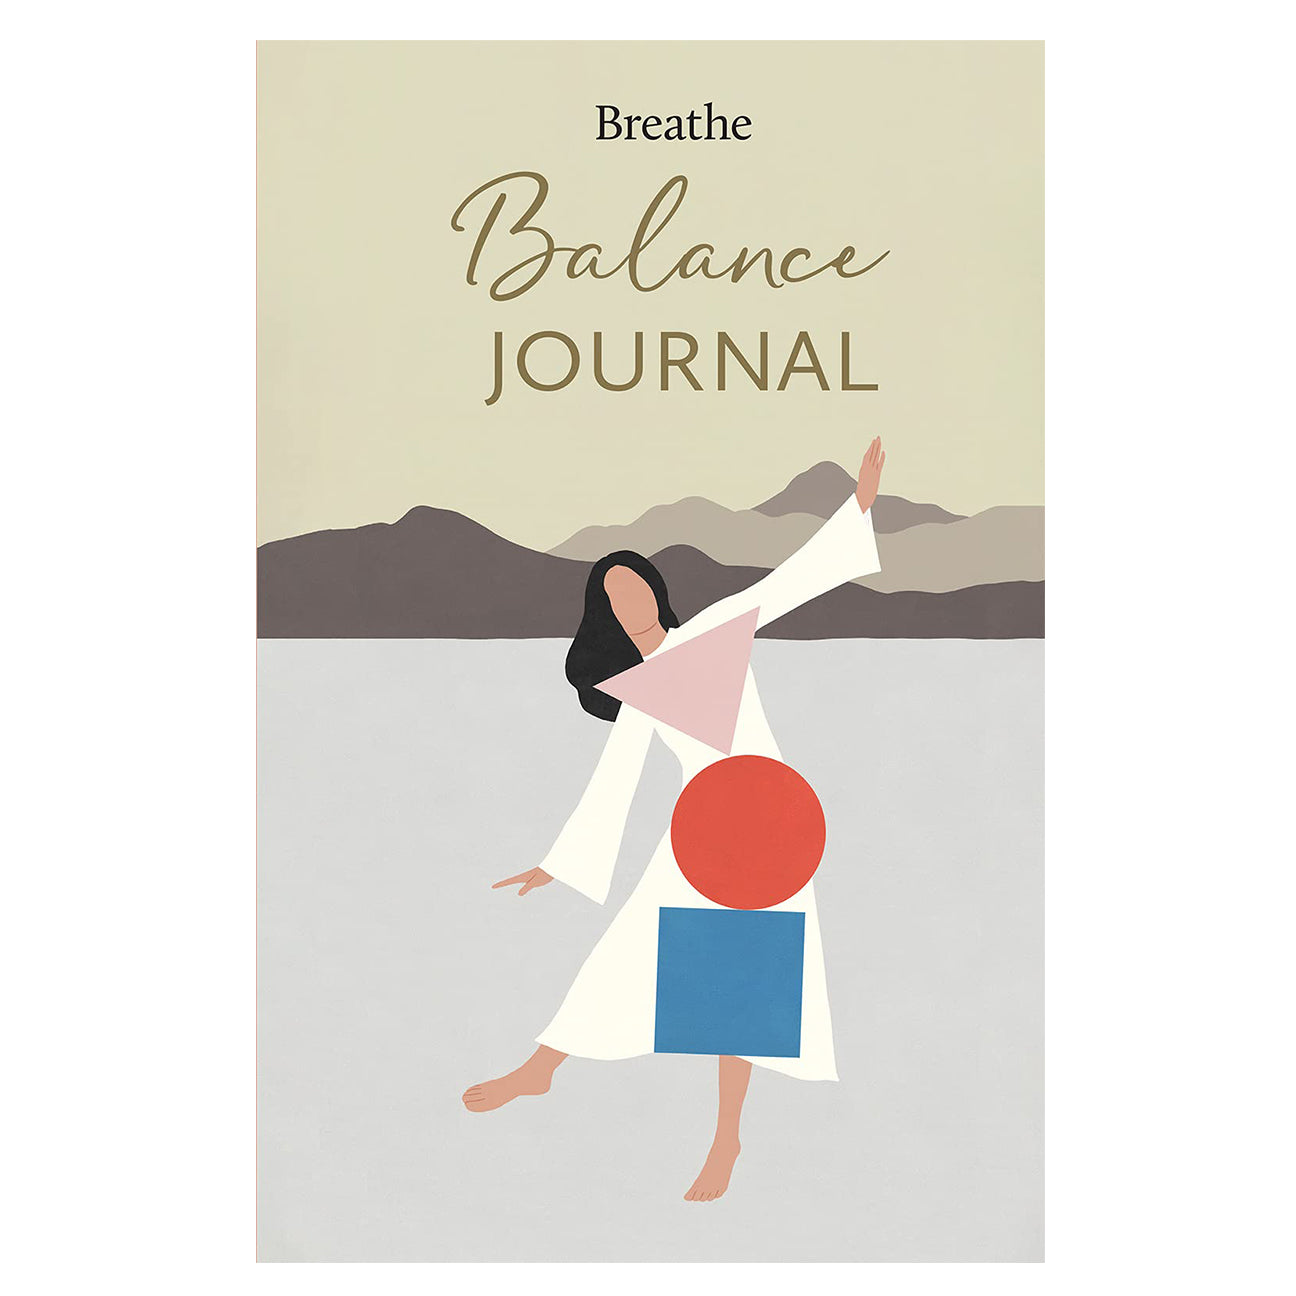 Breathe Balance Journal